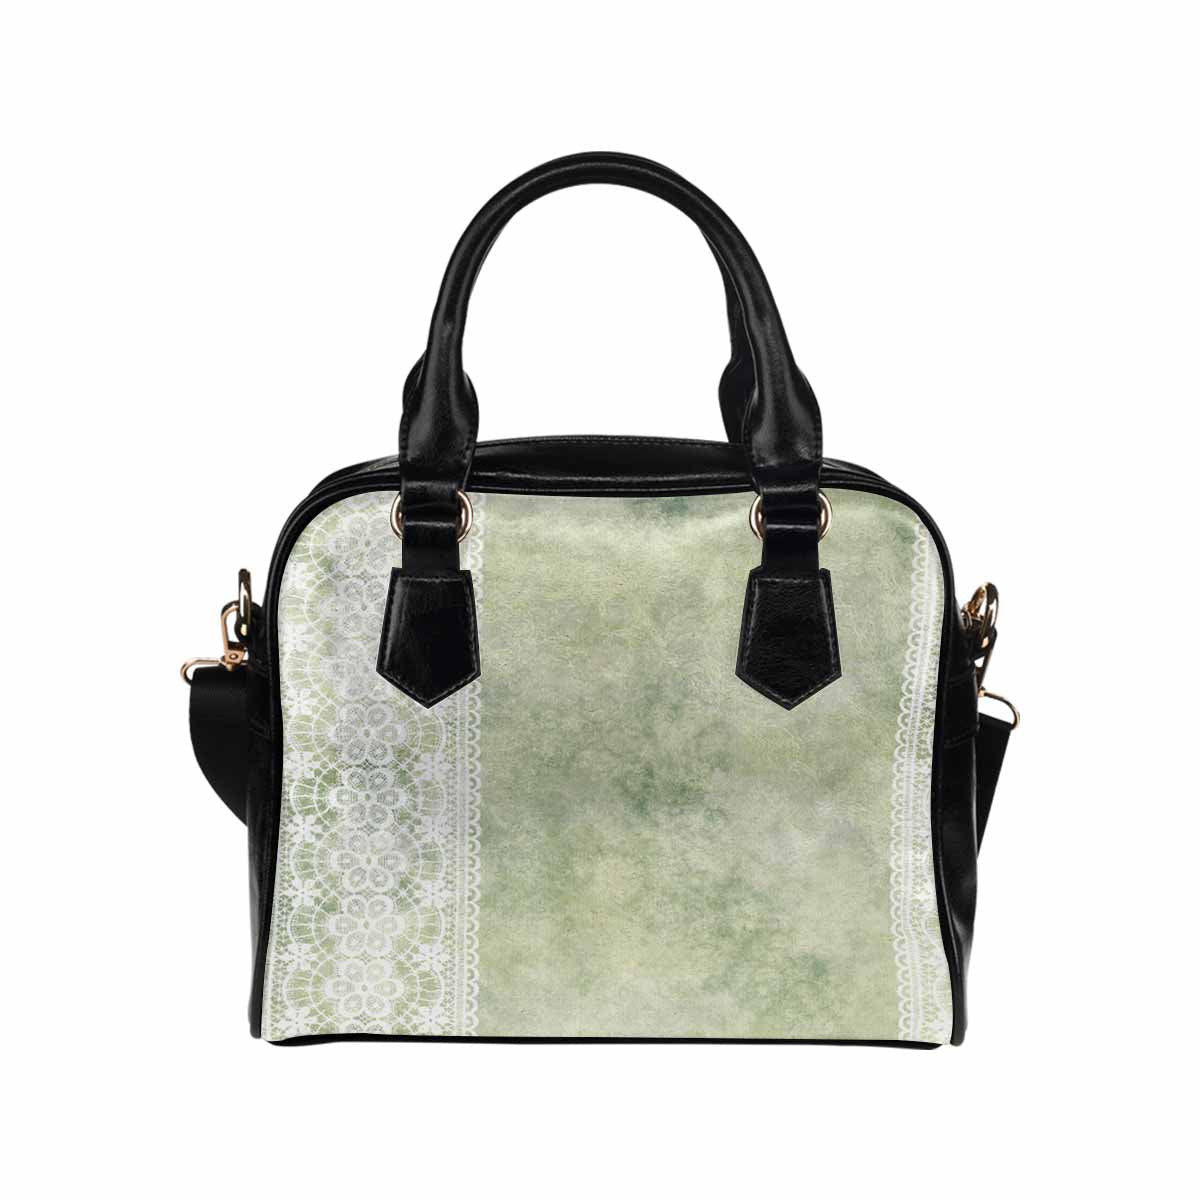 Victorian lace print, cute handbag, Mod 19163453, design 42